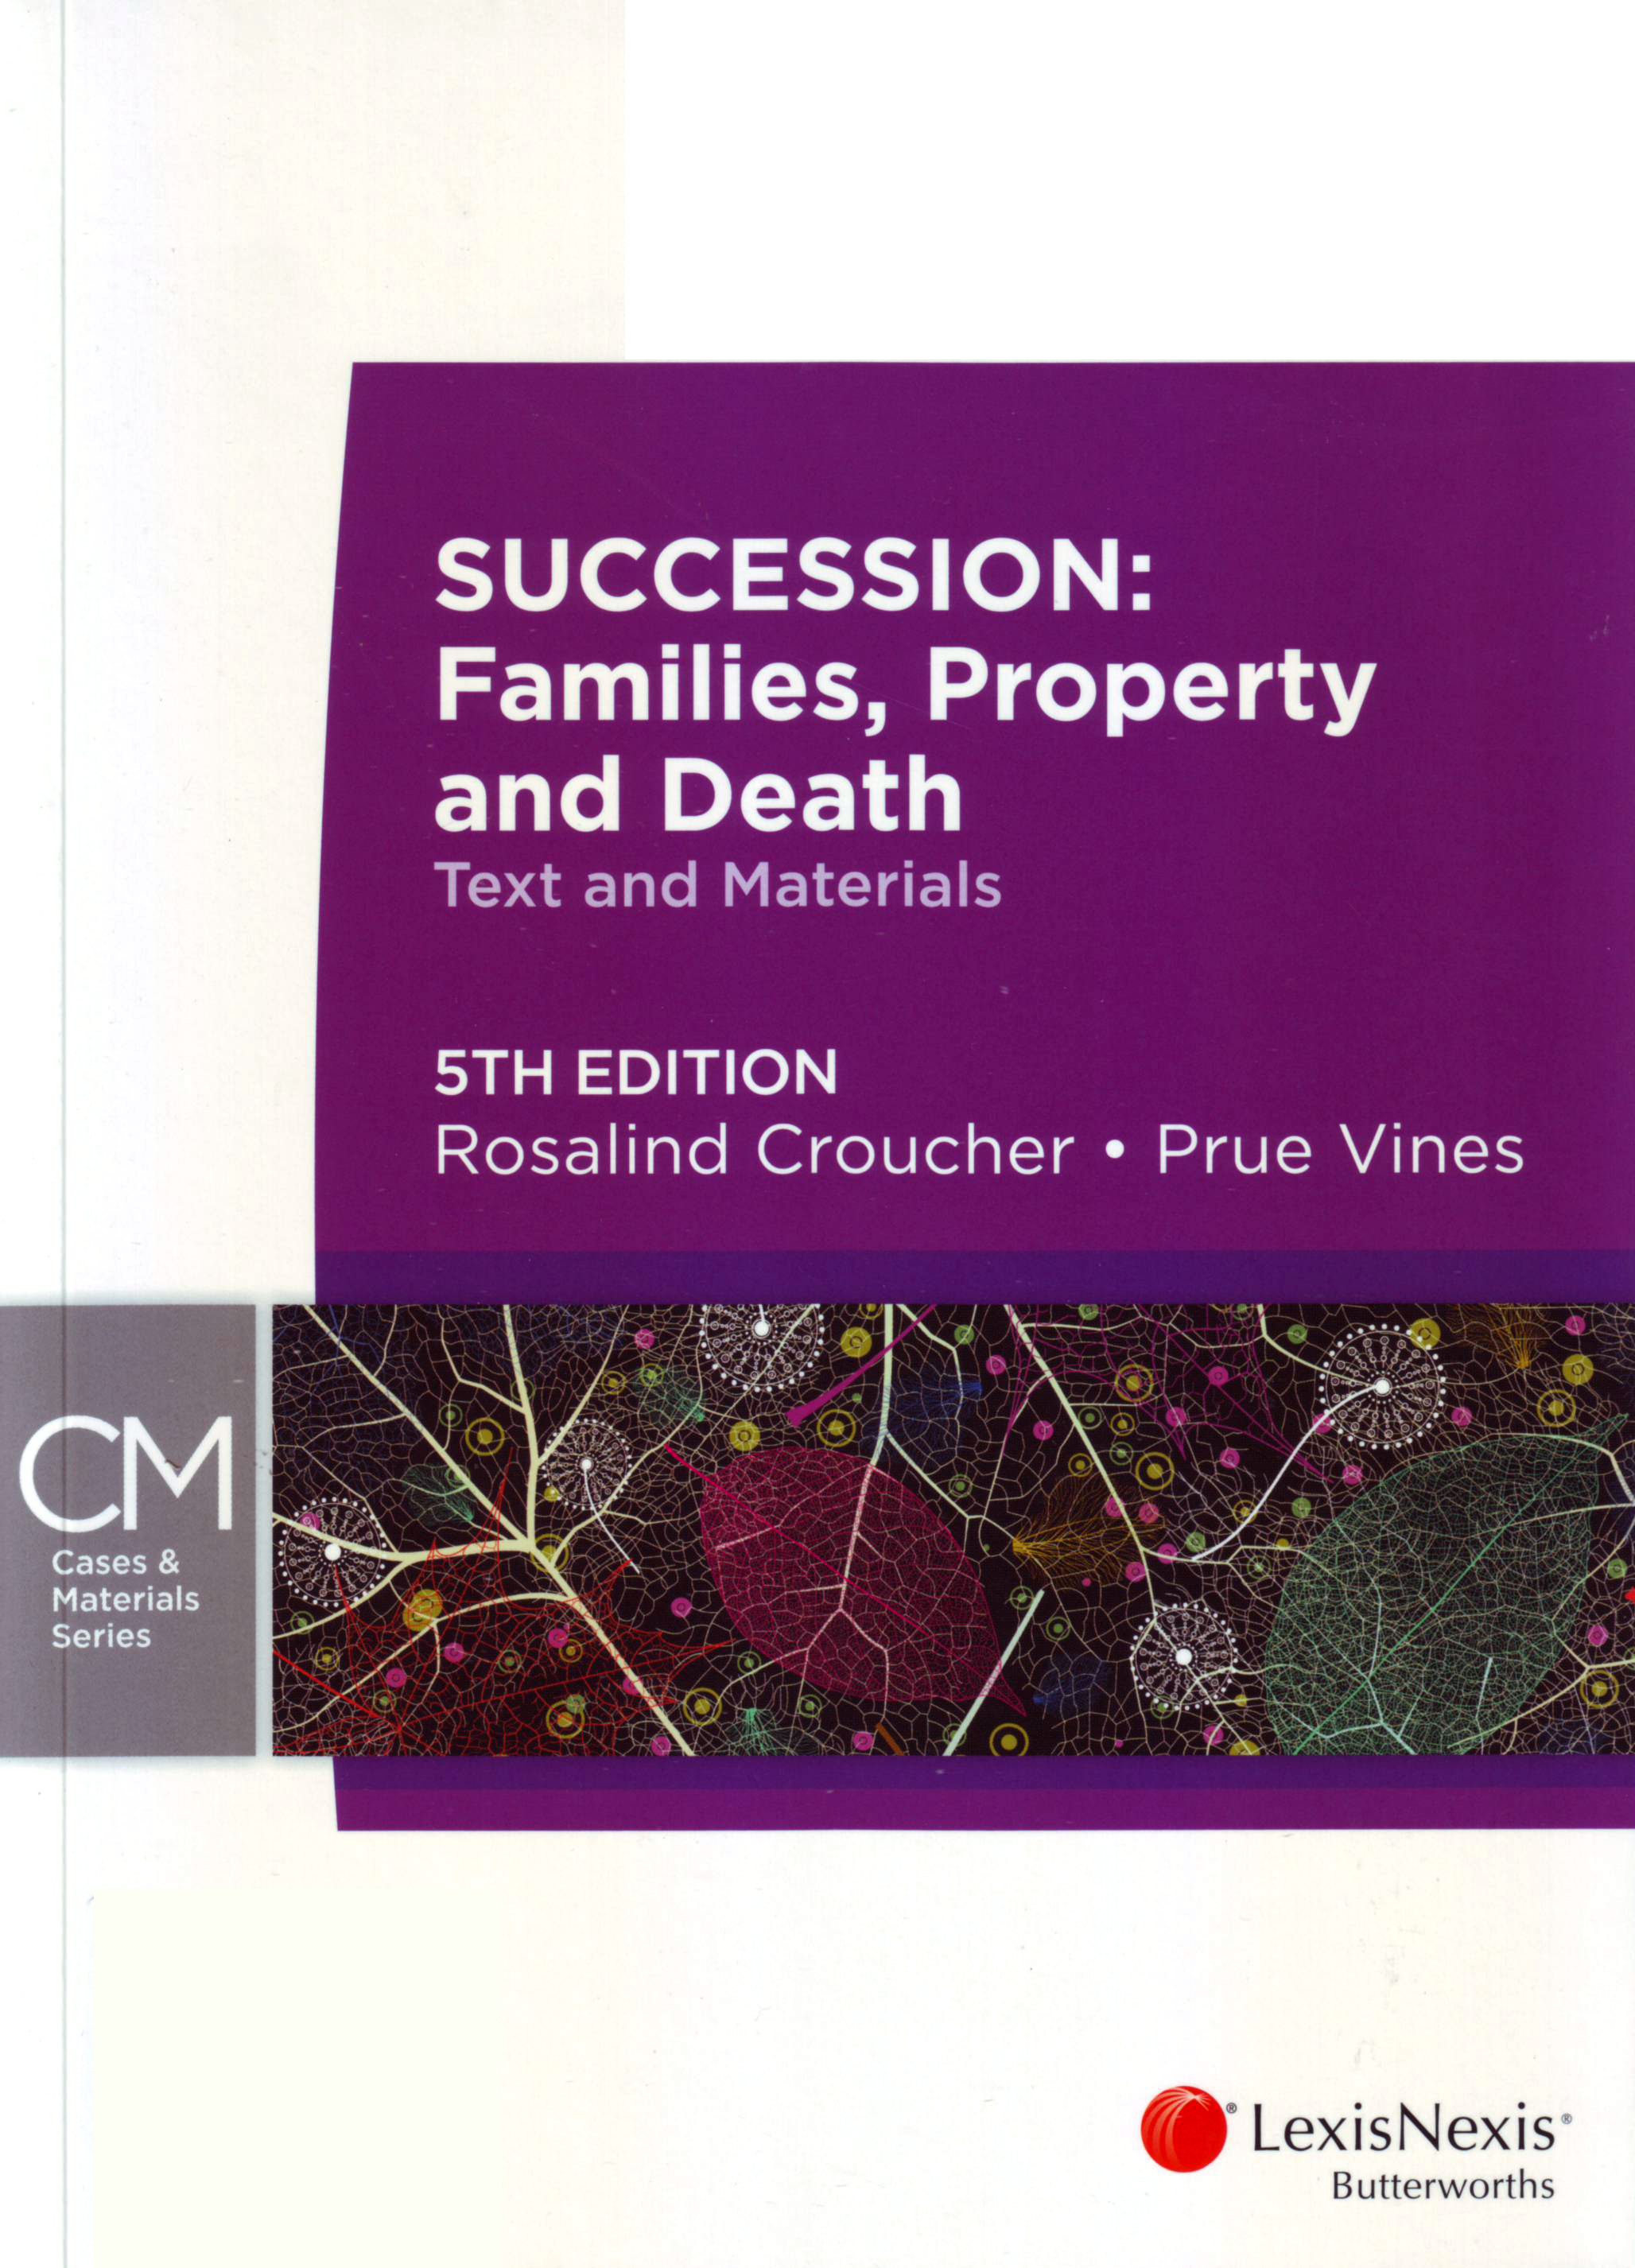 Succession: Families, Property and Death e5